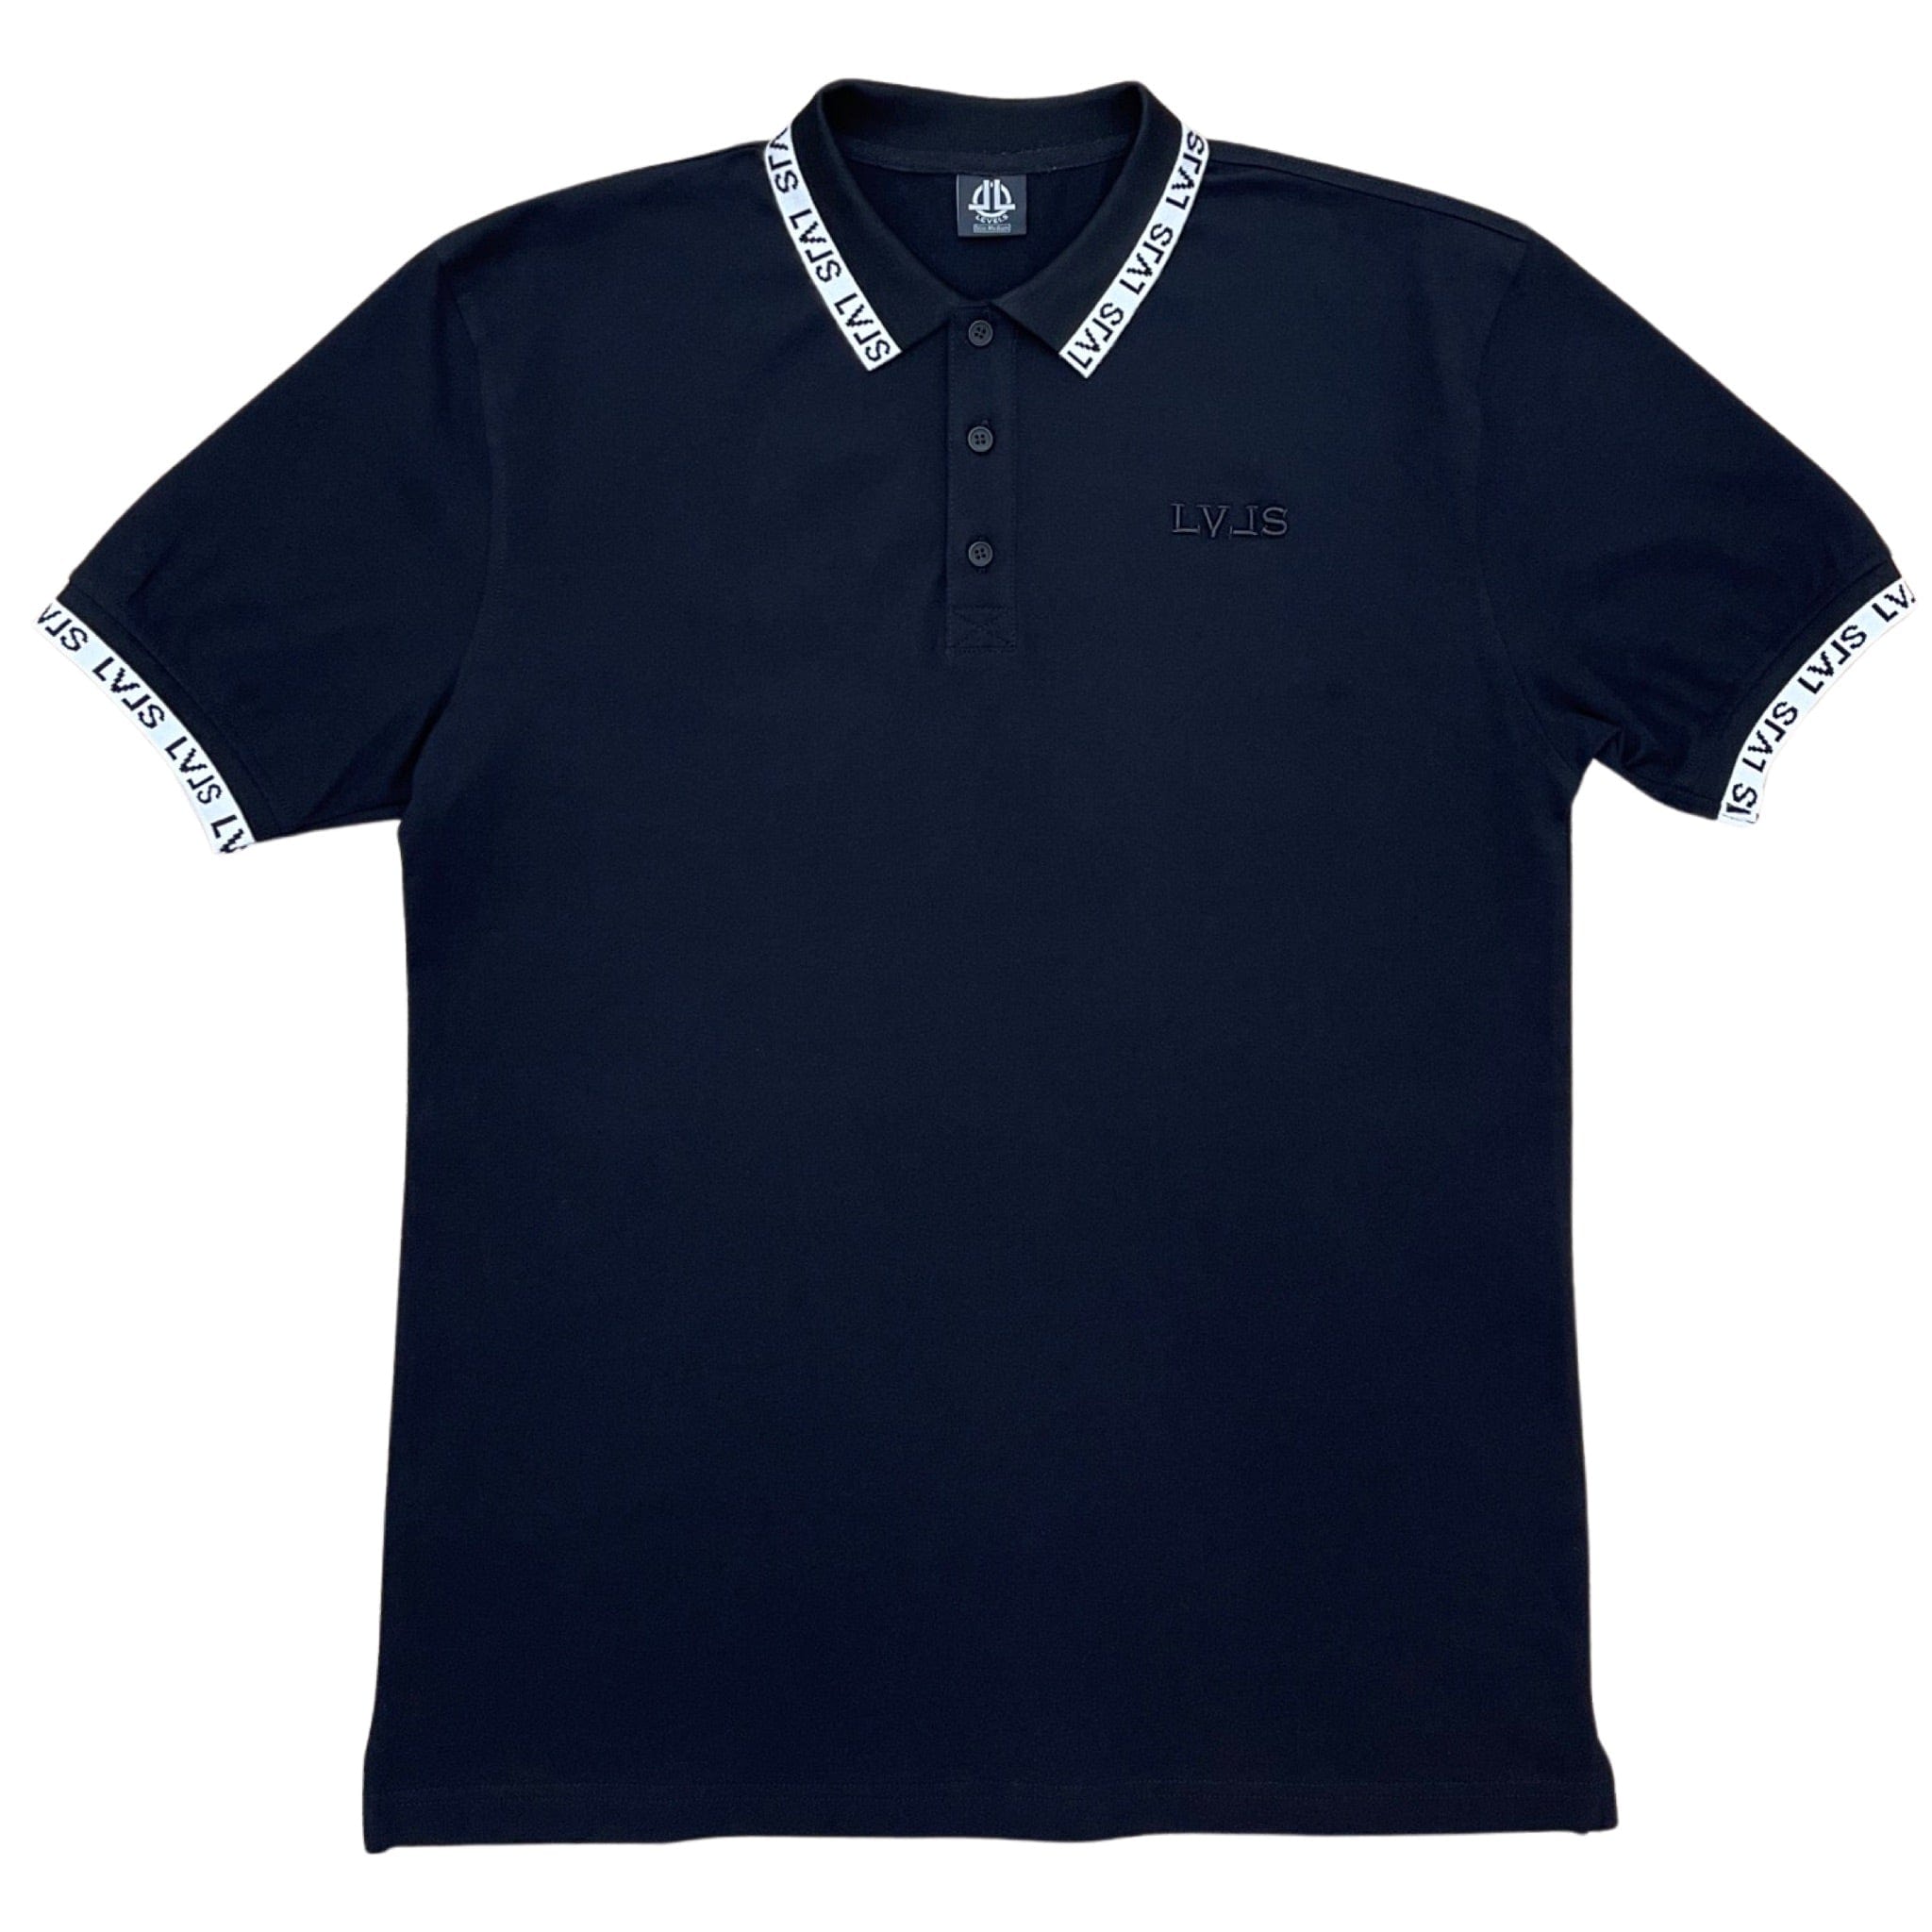 LEVELS, LLC Shirts & Tops LVLS Polo (Black w/ White Logo)